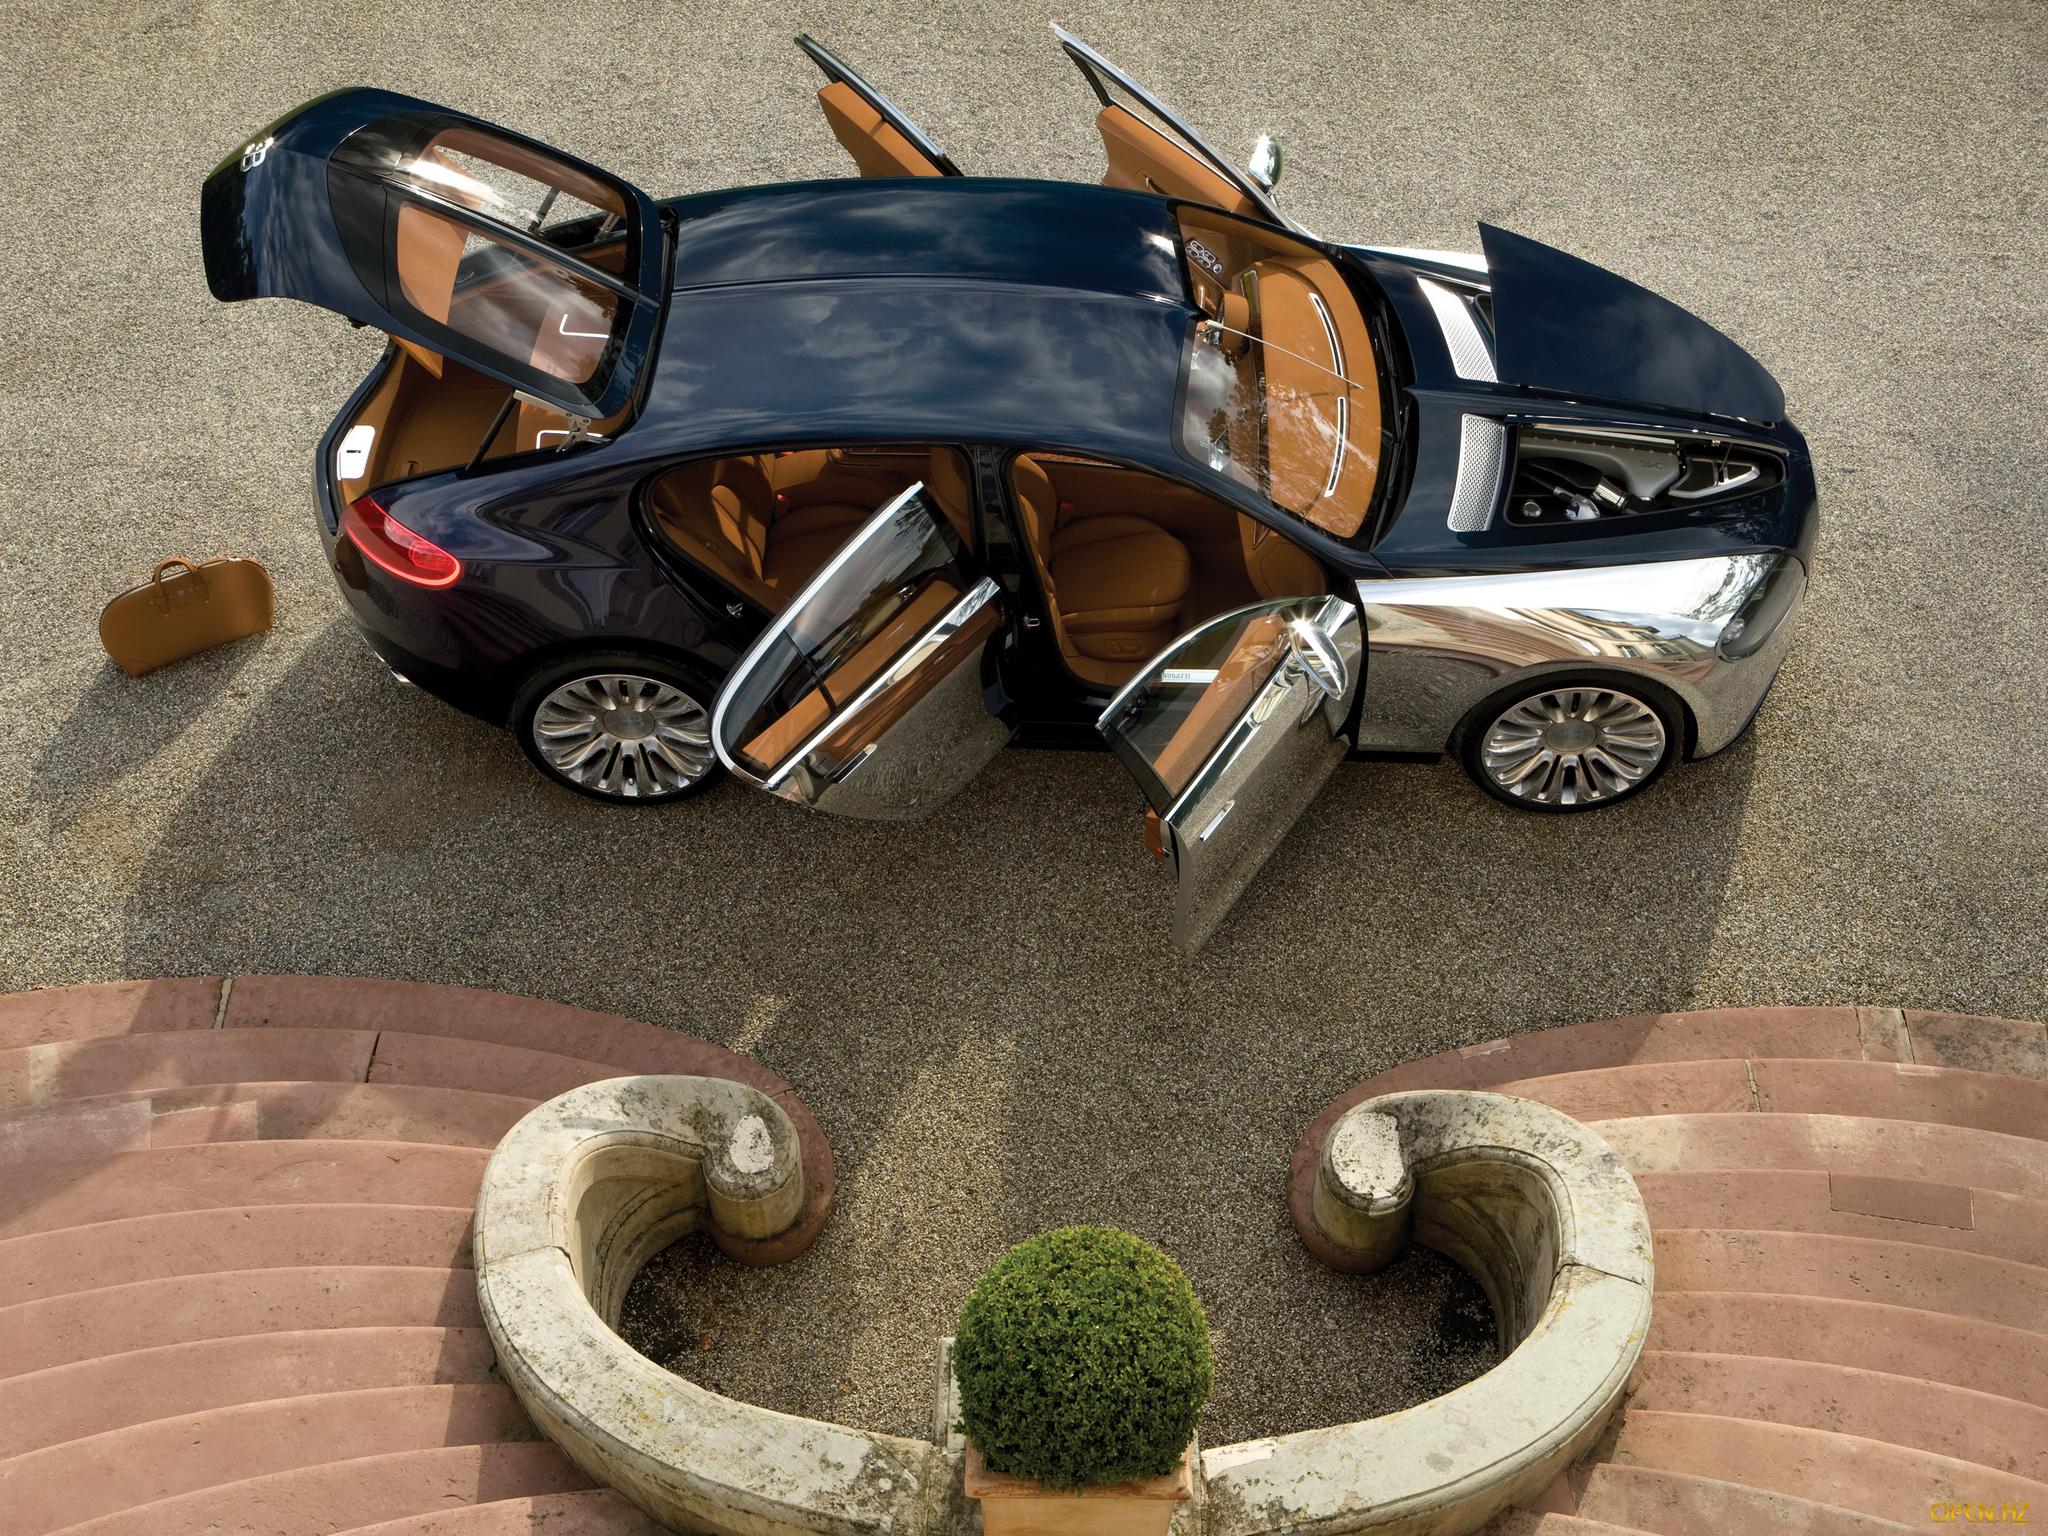 Bugatti Galibier Backgrounds, Compatible - PC, Mobile, Gadgets| 2048x1536 px